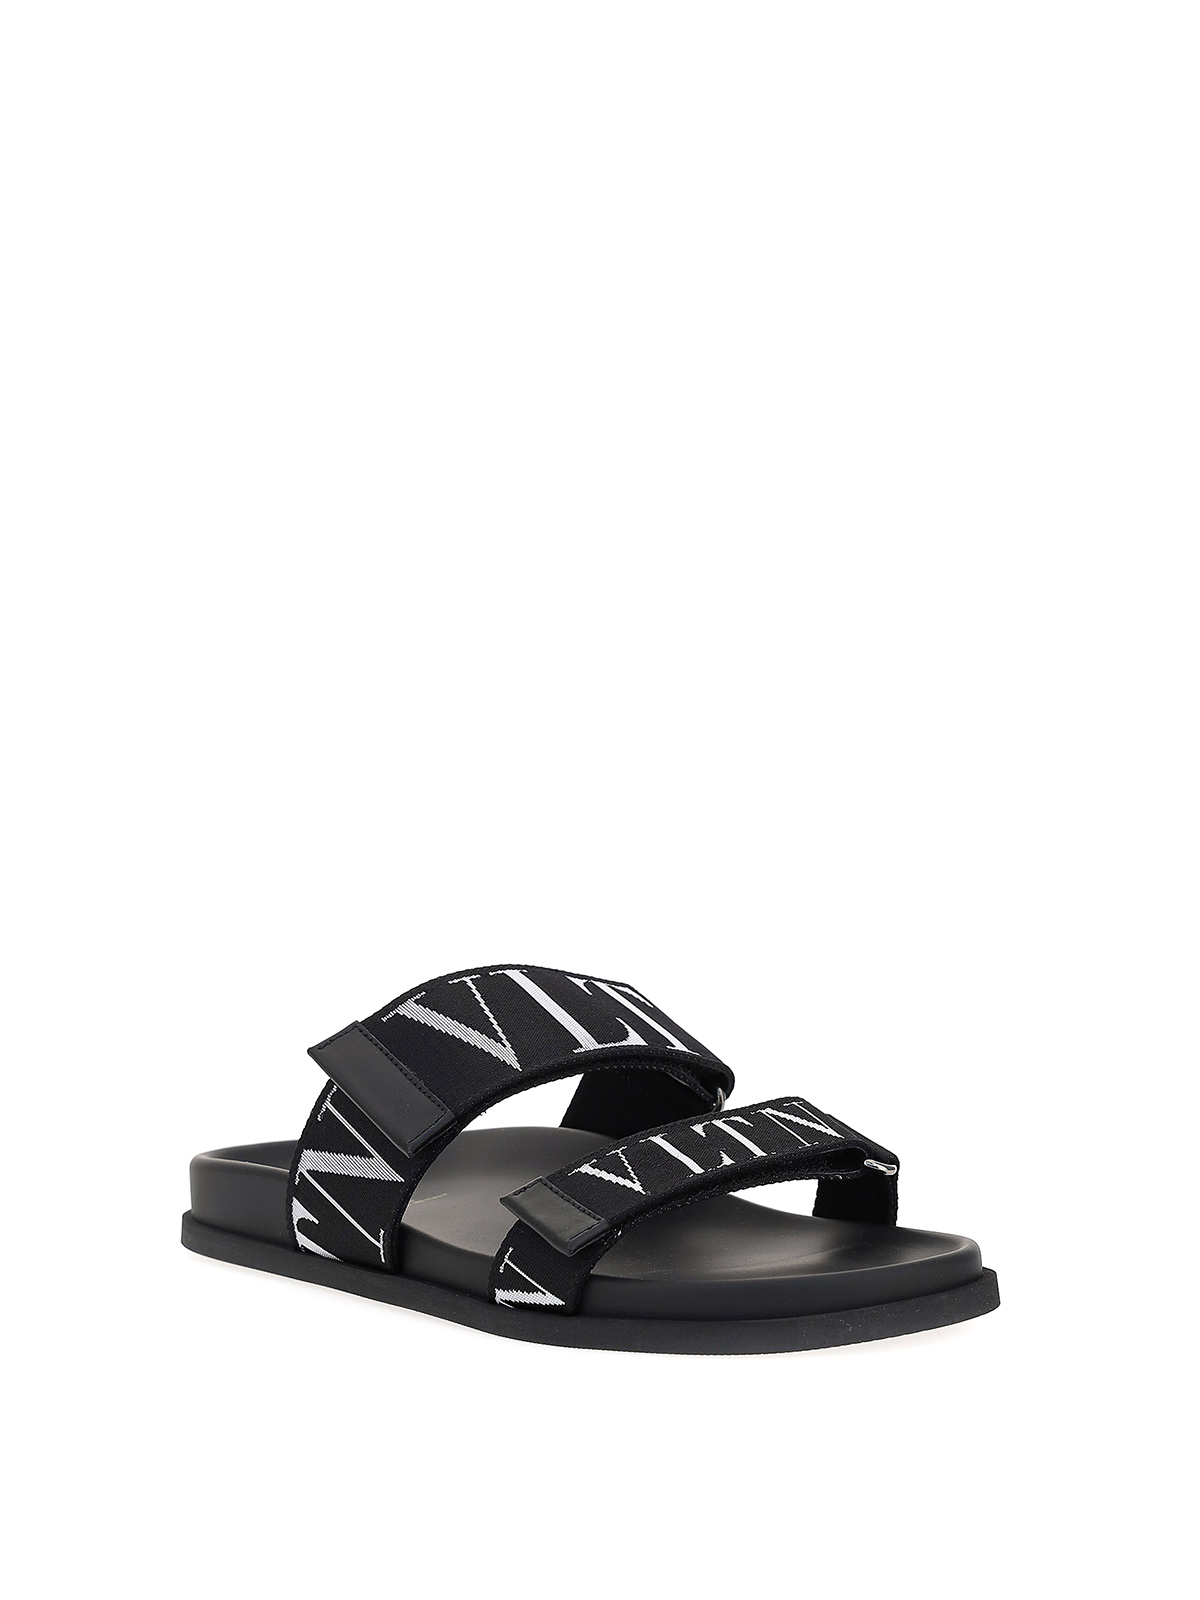 Flip flops Valentino Garavani - Slippers sandals - UY2S0D61CWI0NI